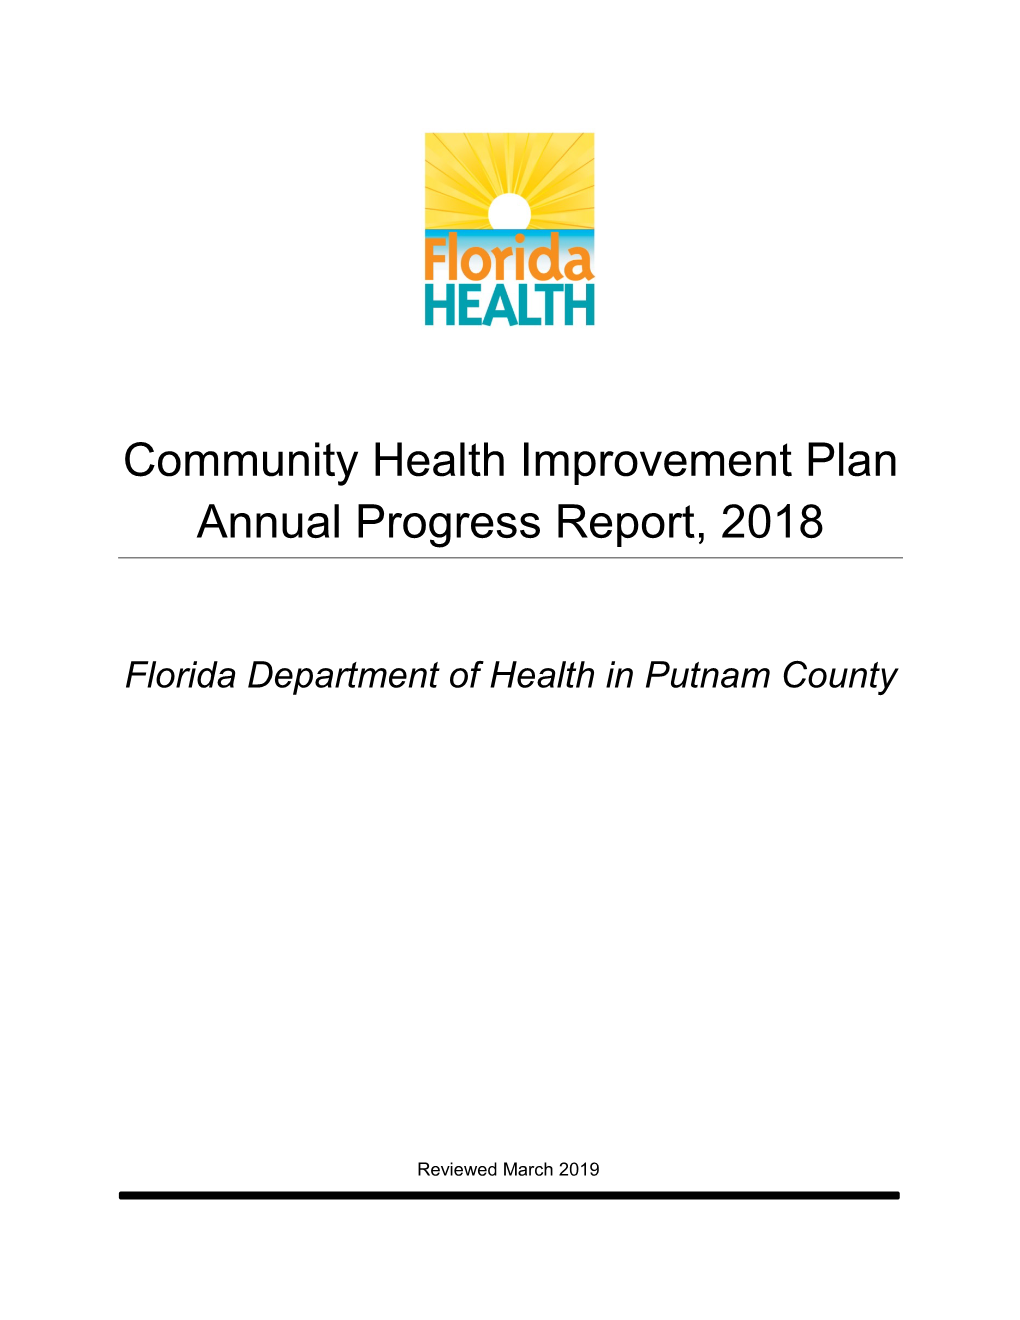 Community Health Improvement Plan Annual Progress Report, 2018